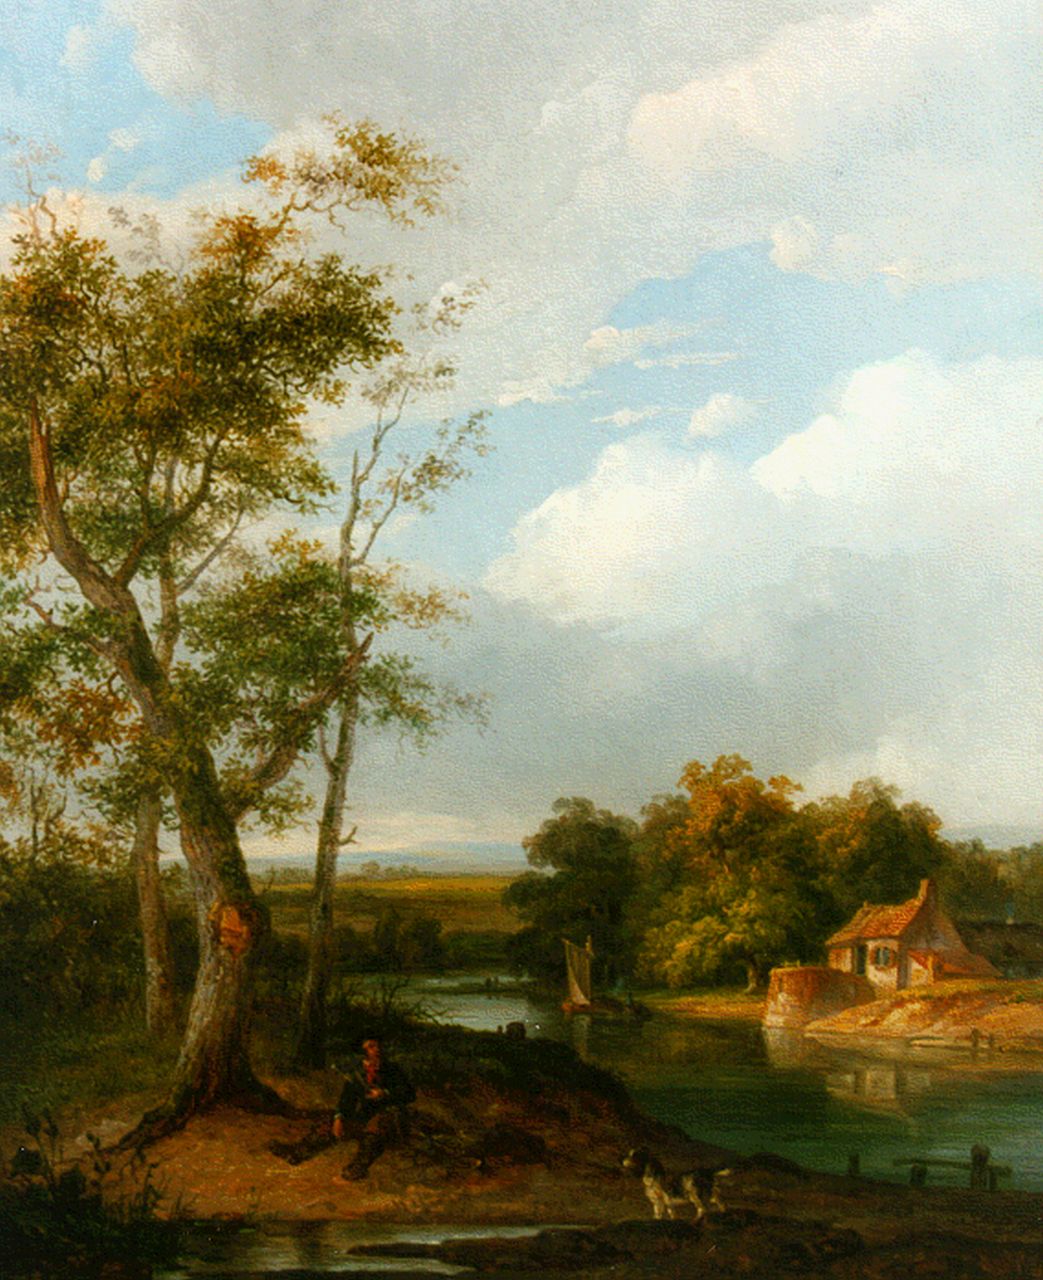 Burgh P.D. van der | Pieter Daniel van der Burgh, Rustende jager langs rivieroever, olieverf op paneel 27,5 x 21,9 cm, gesigneerd rechtsonder